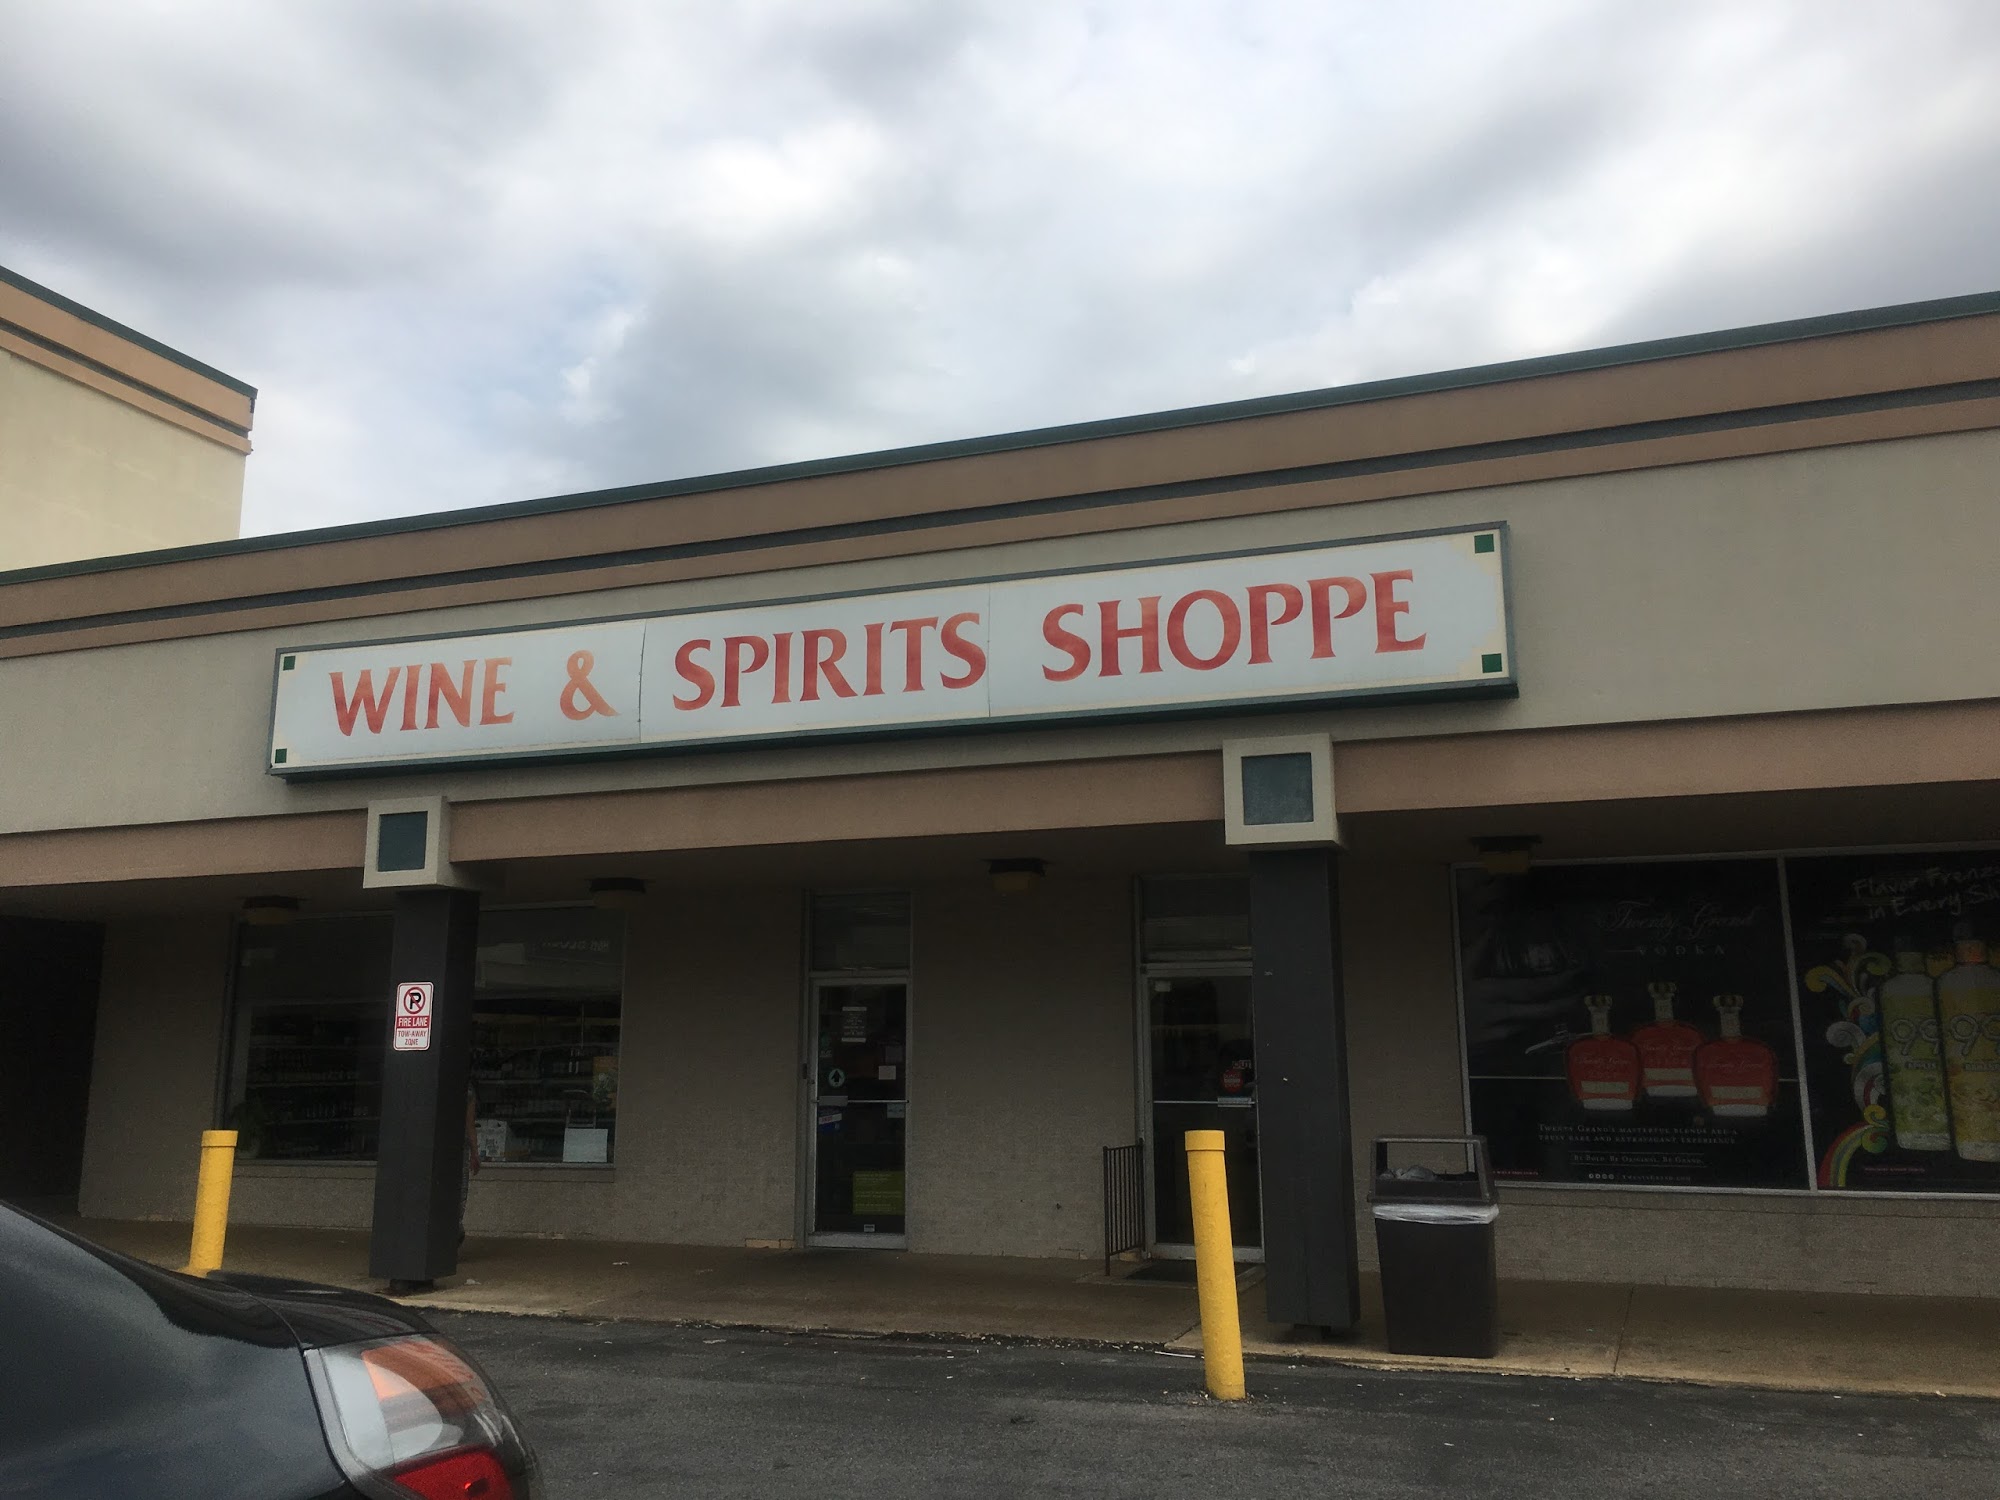 Fine Wine & Good Spirits